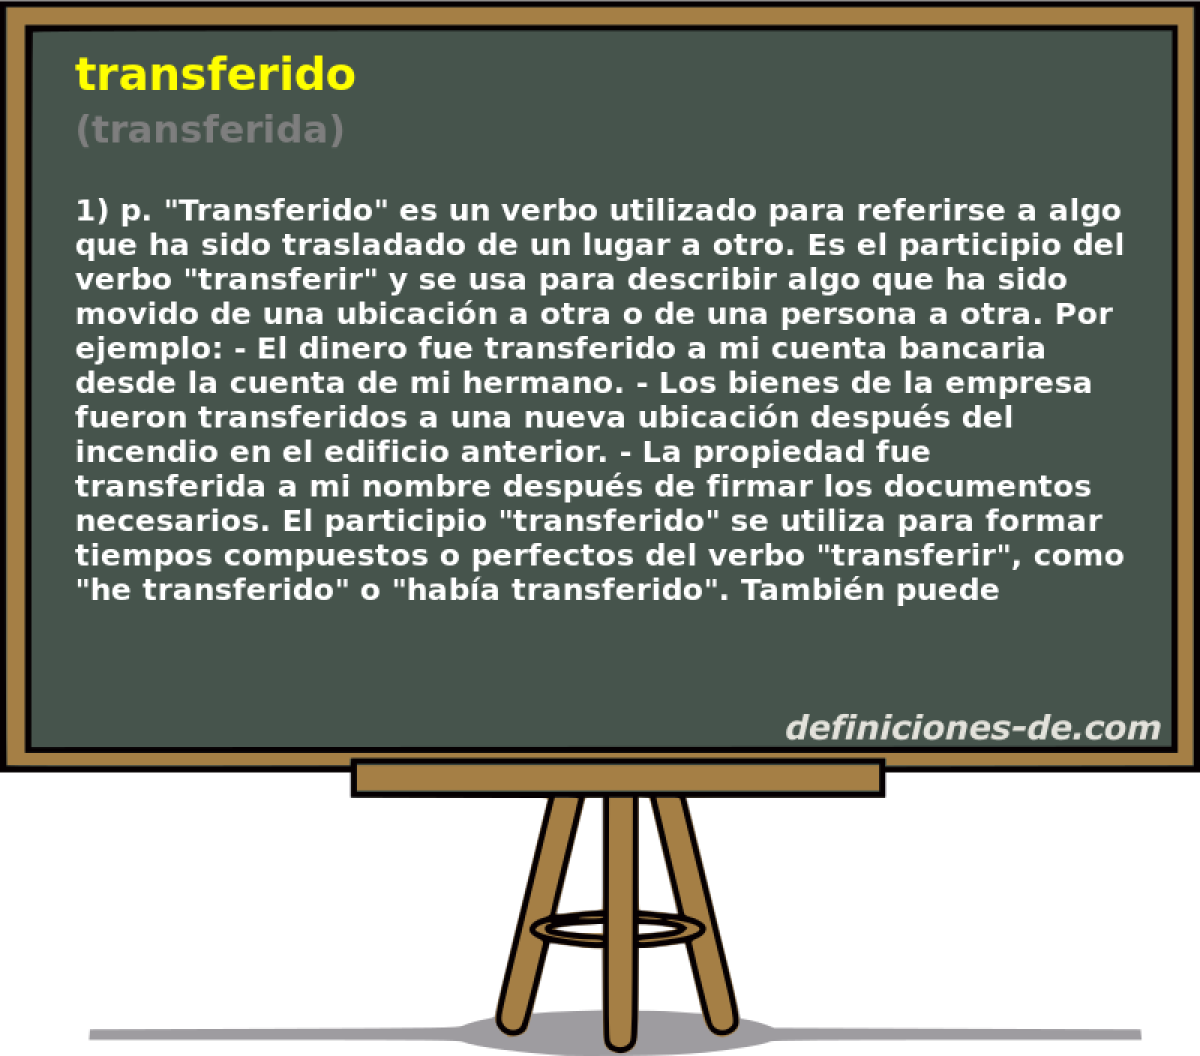 transferido (transferida)